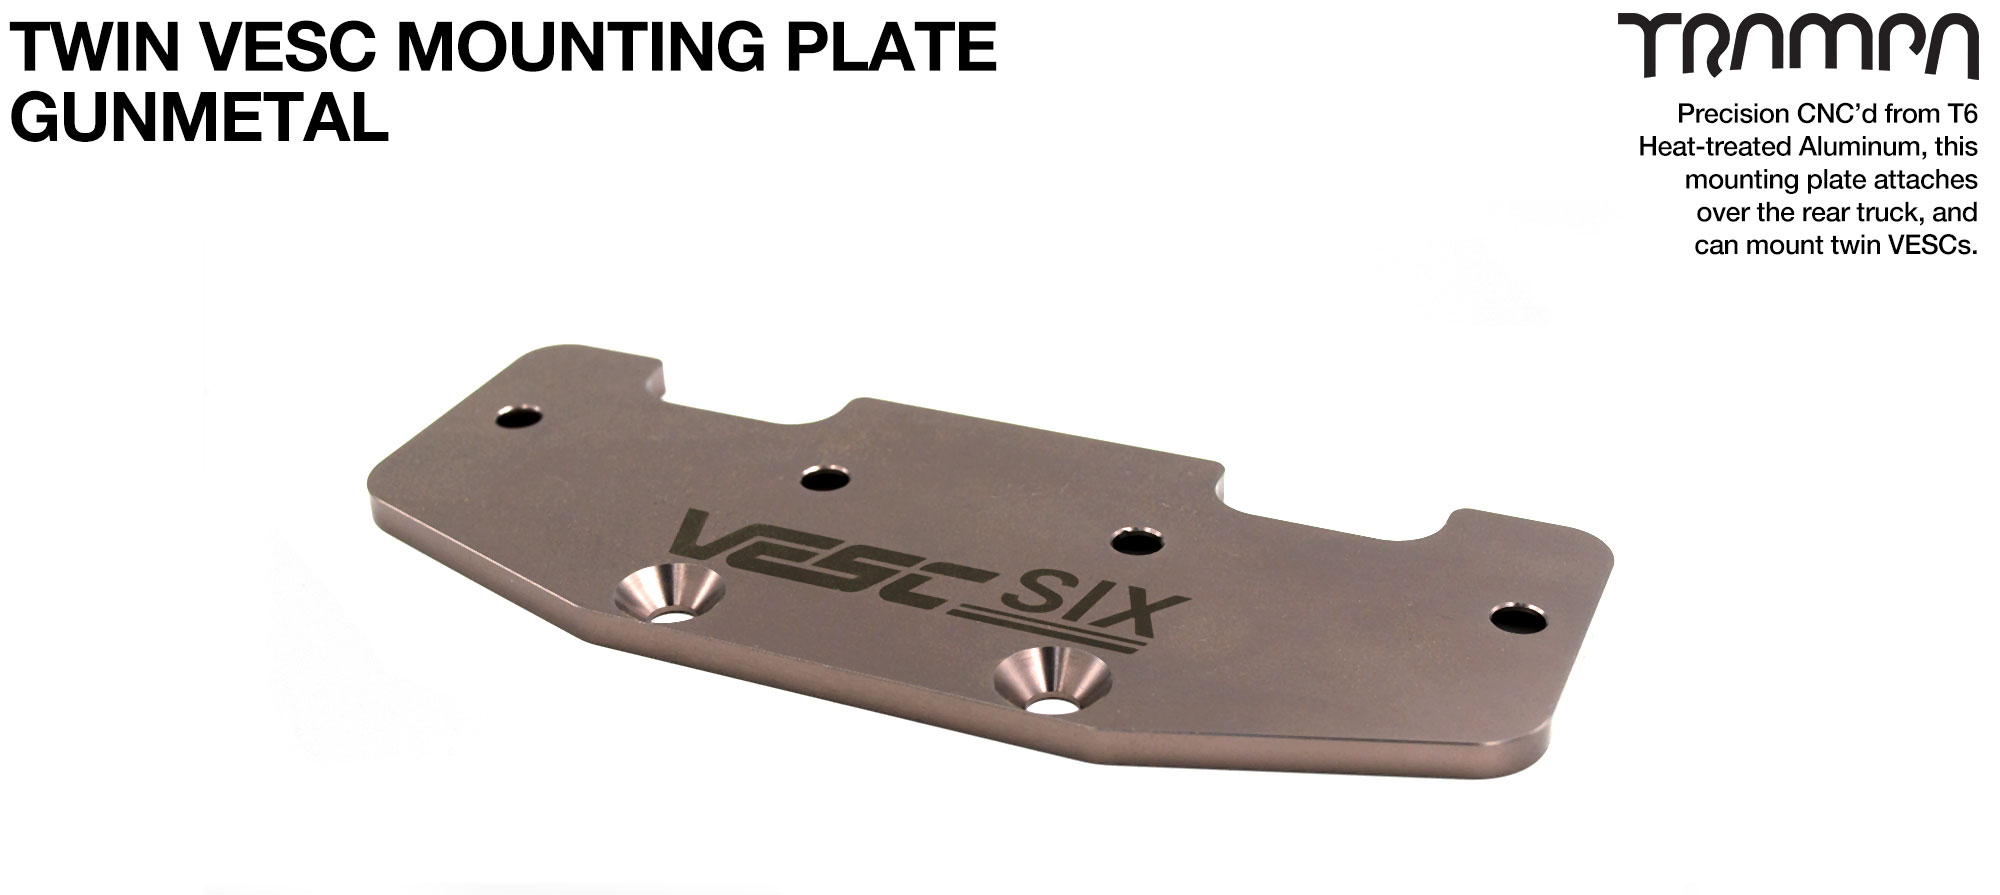 TWIN VESC 6 Aluminium Mounting Plate - GUNMETAL 